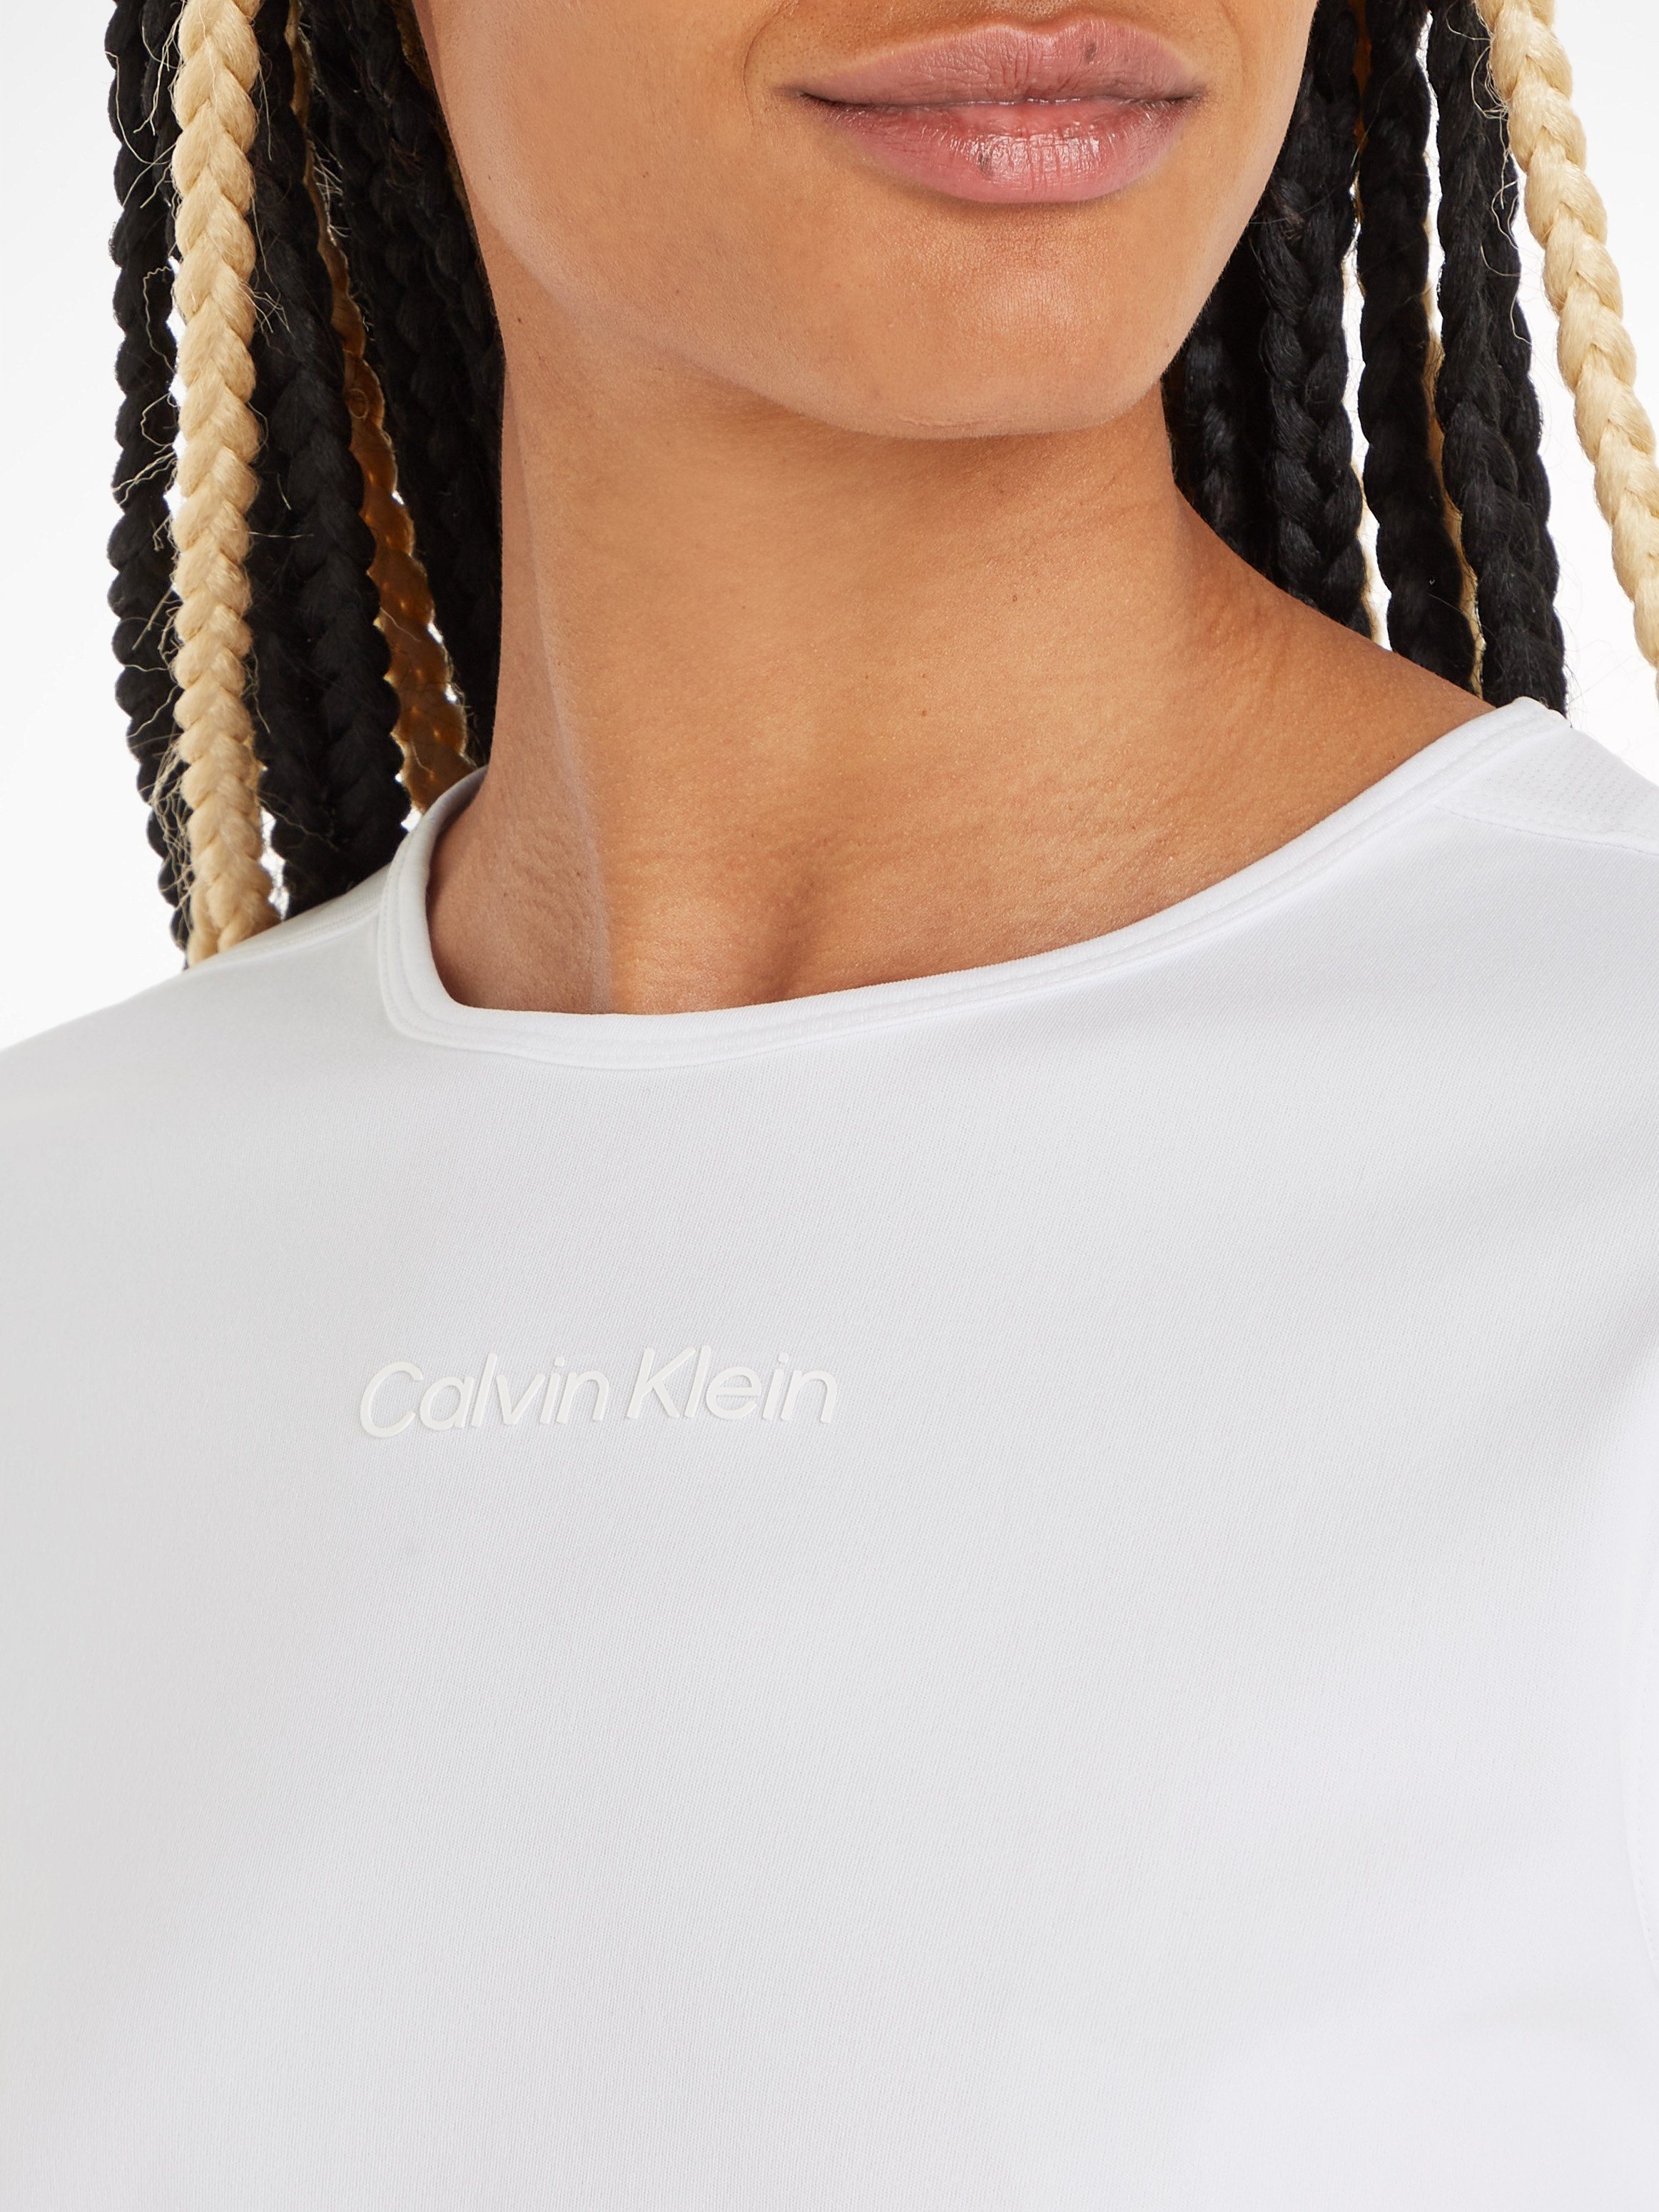 Calvin Klein Sport White T-Shirt Bright